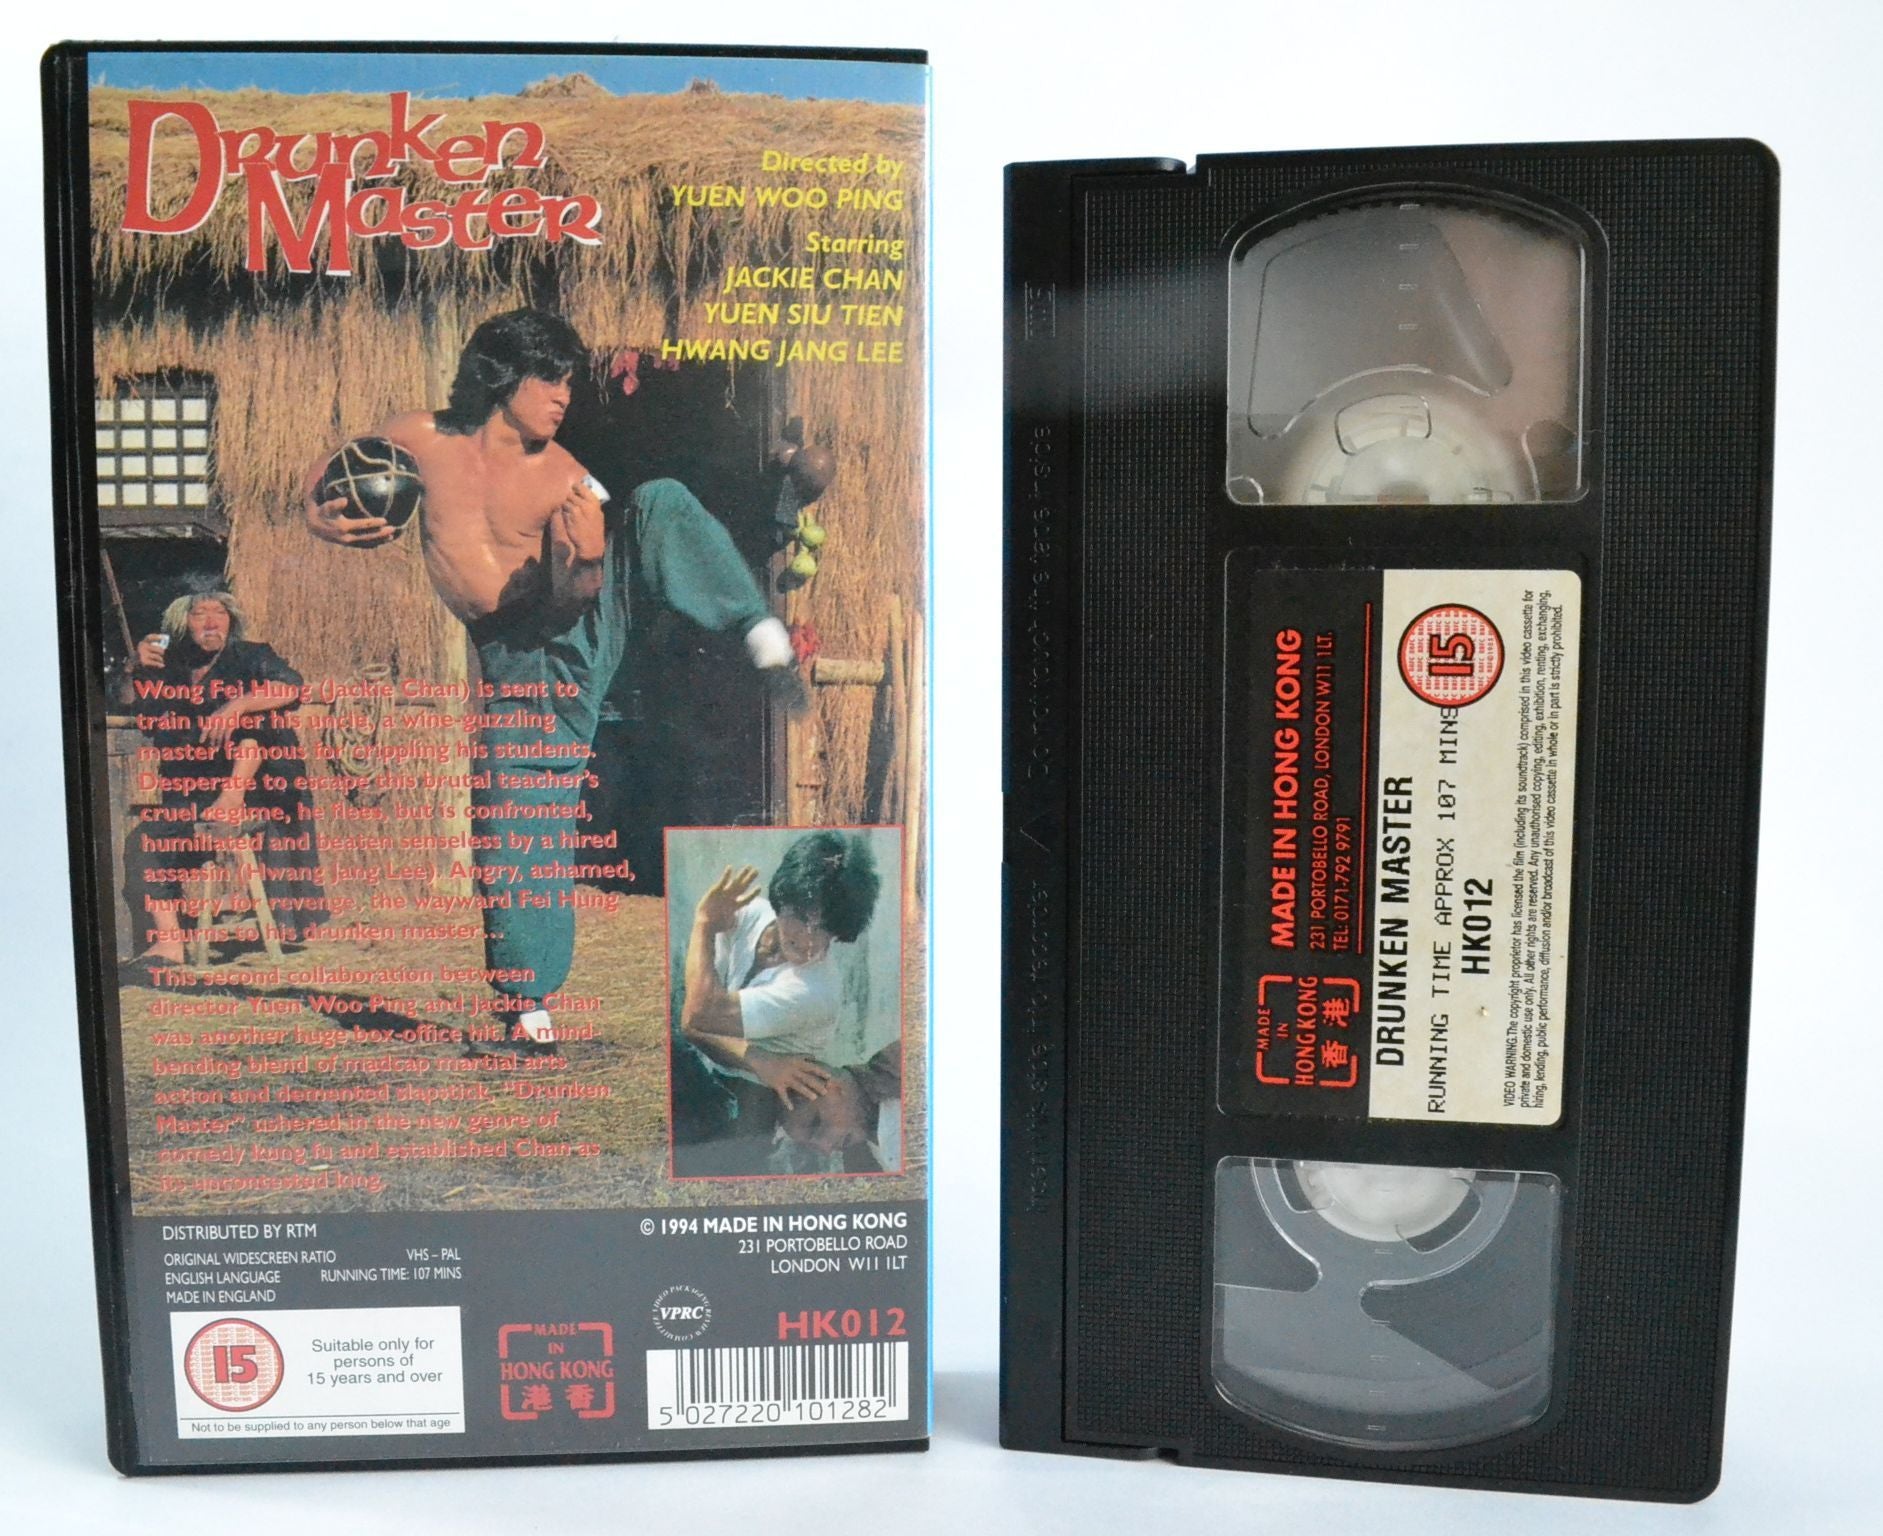 Drunken Master [Widescreen]: Jackie Chan - Yuen Woo Ping - Eng Dub - VHS-